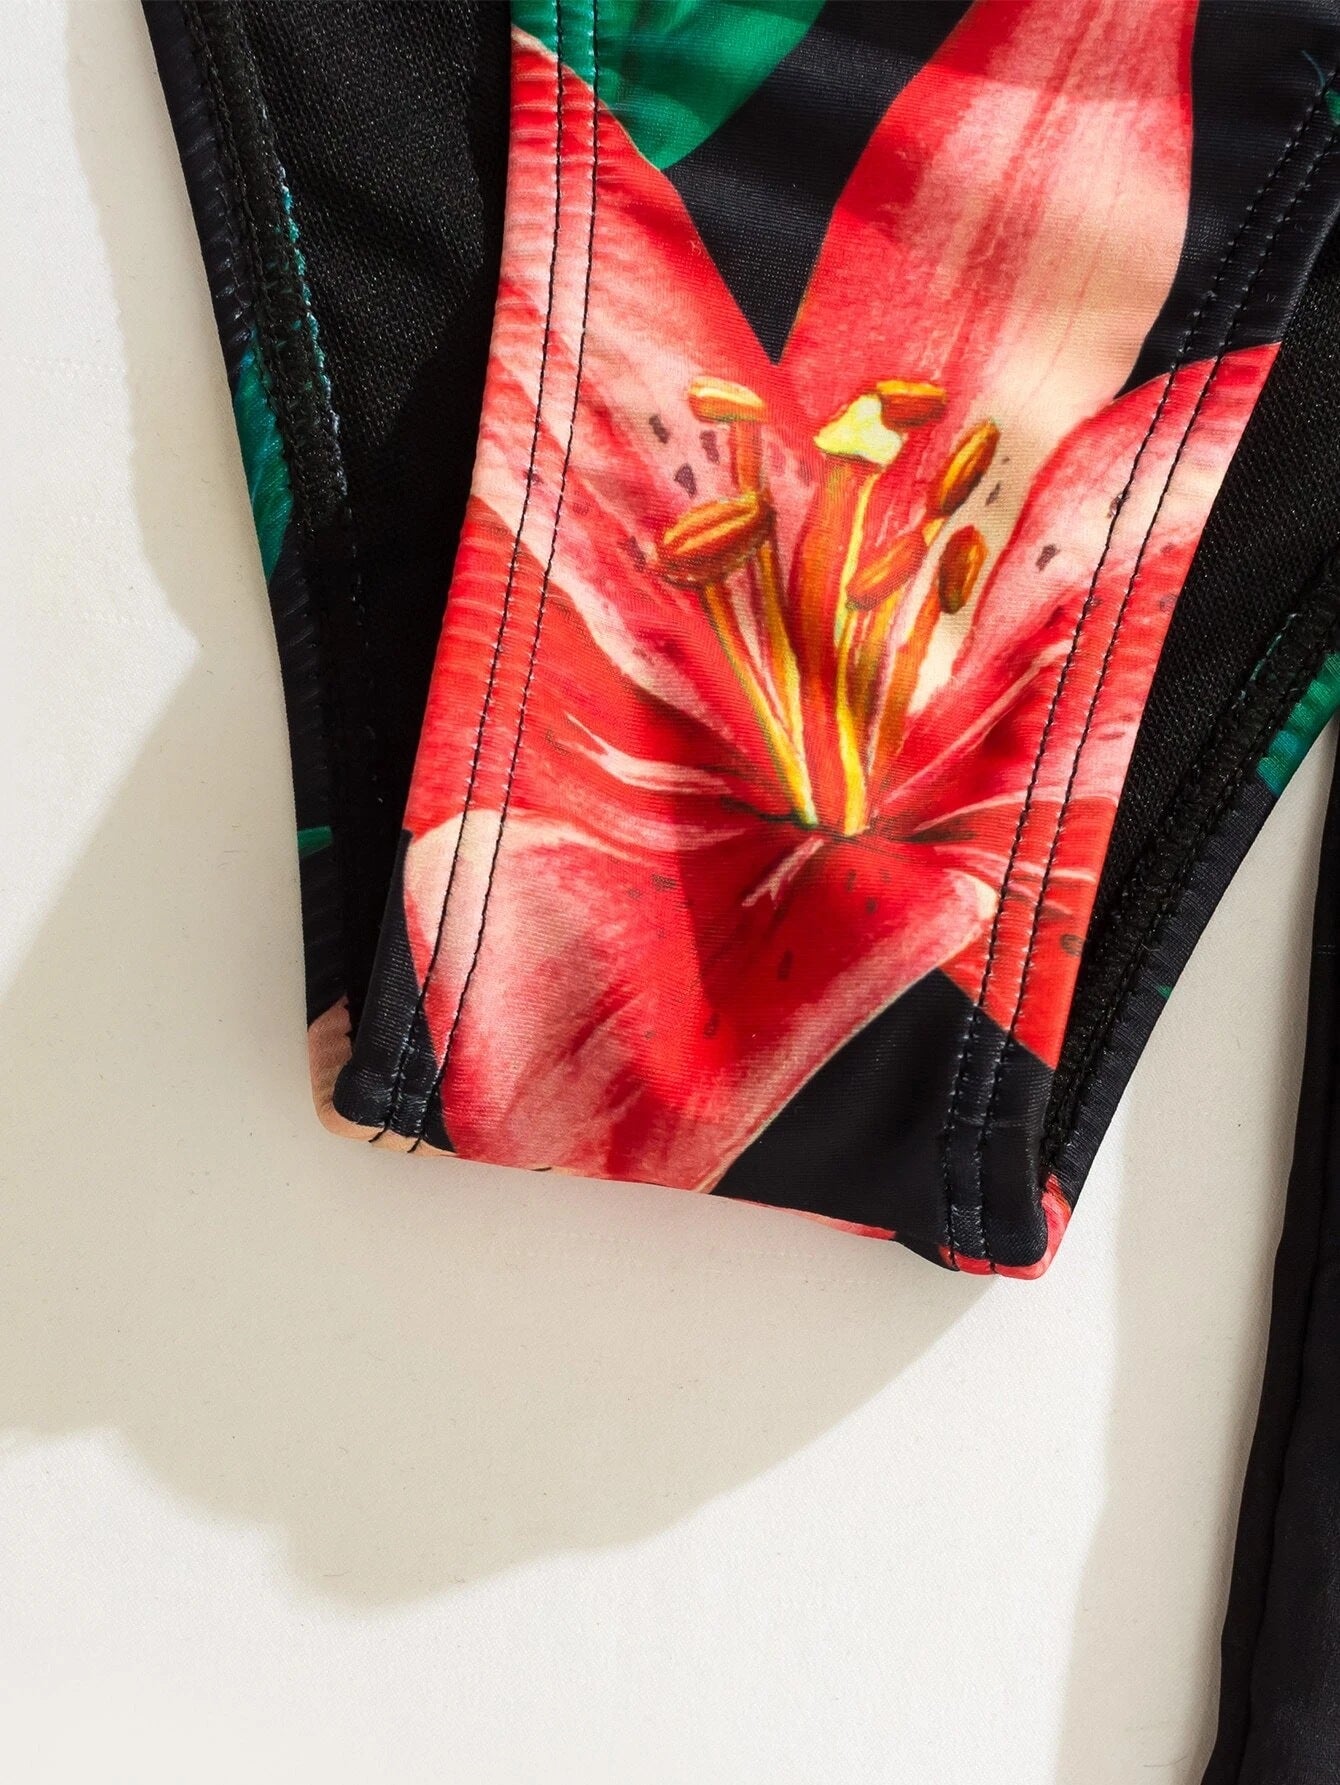 "Lola" Floral Print Bow Crop Top High Waist Bikini 3-Piece Set